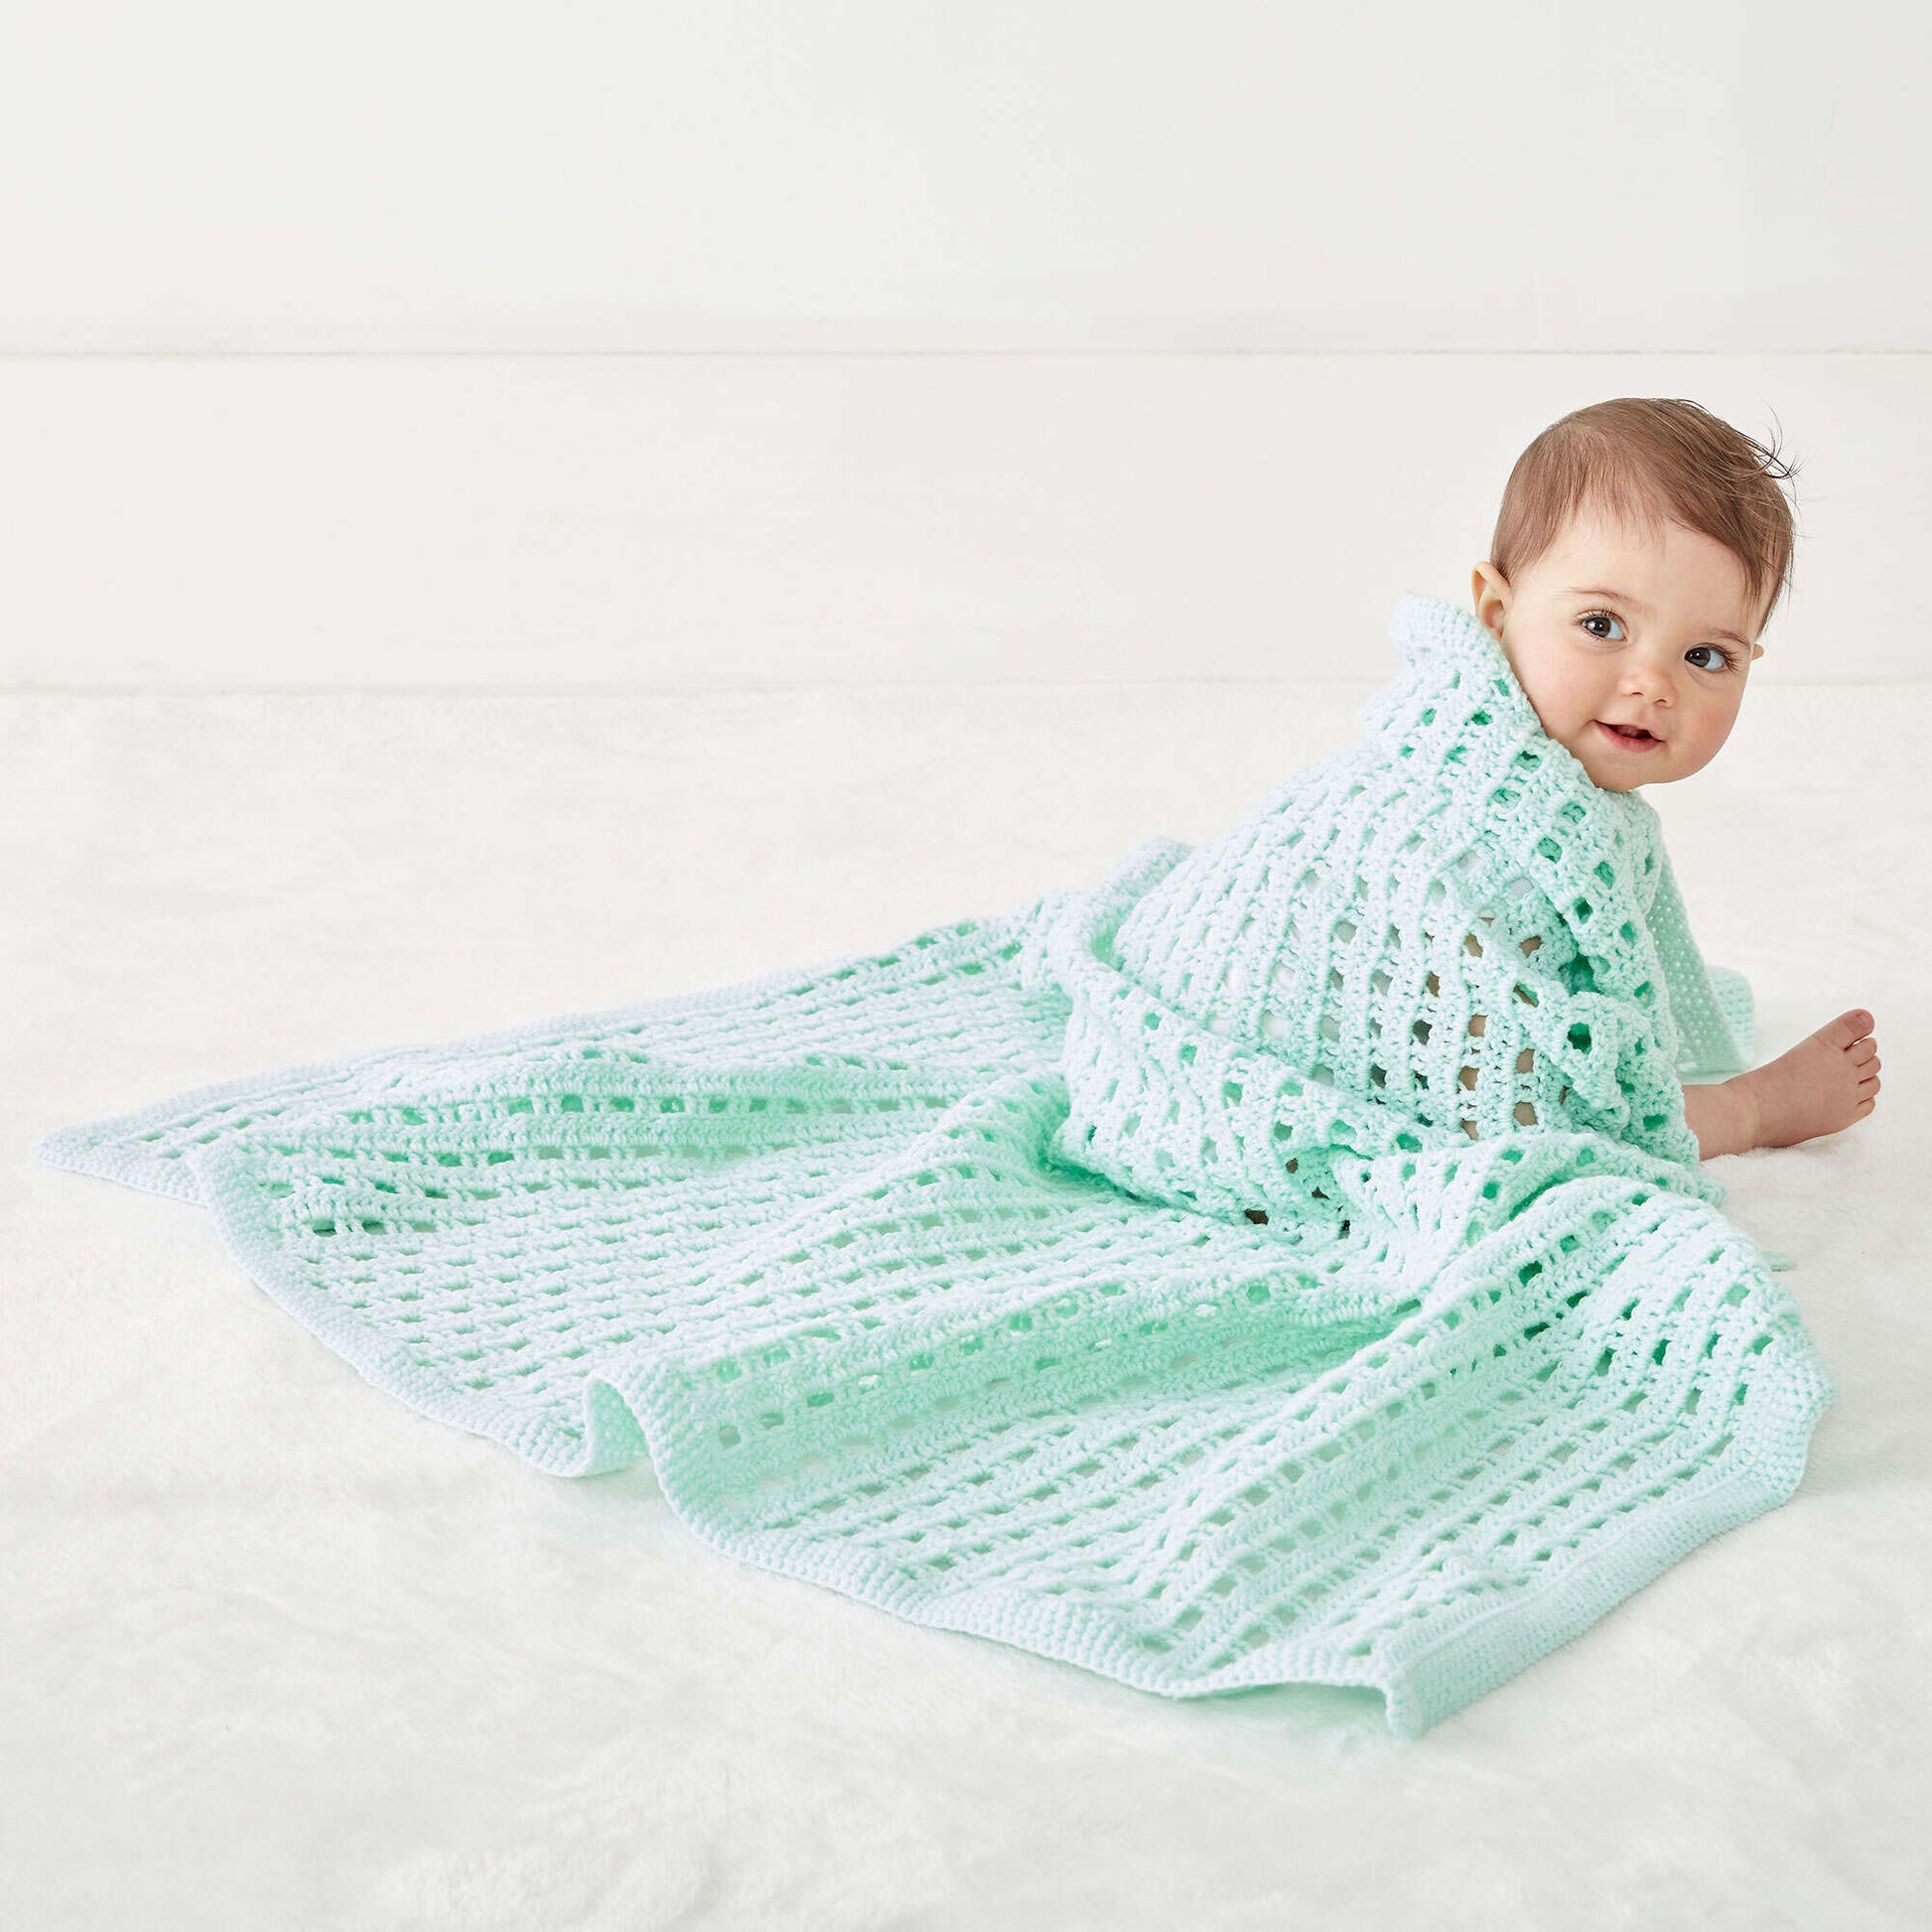 Bernat Crochet Happy Baby Blanket Crochet Blanket made in Bernat Baby Sport yarn